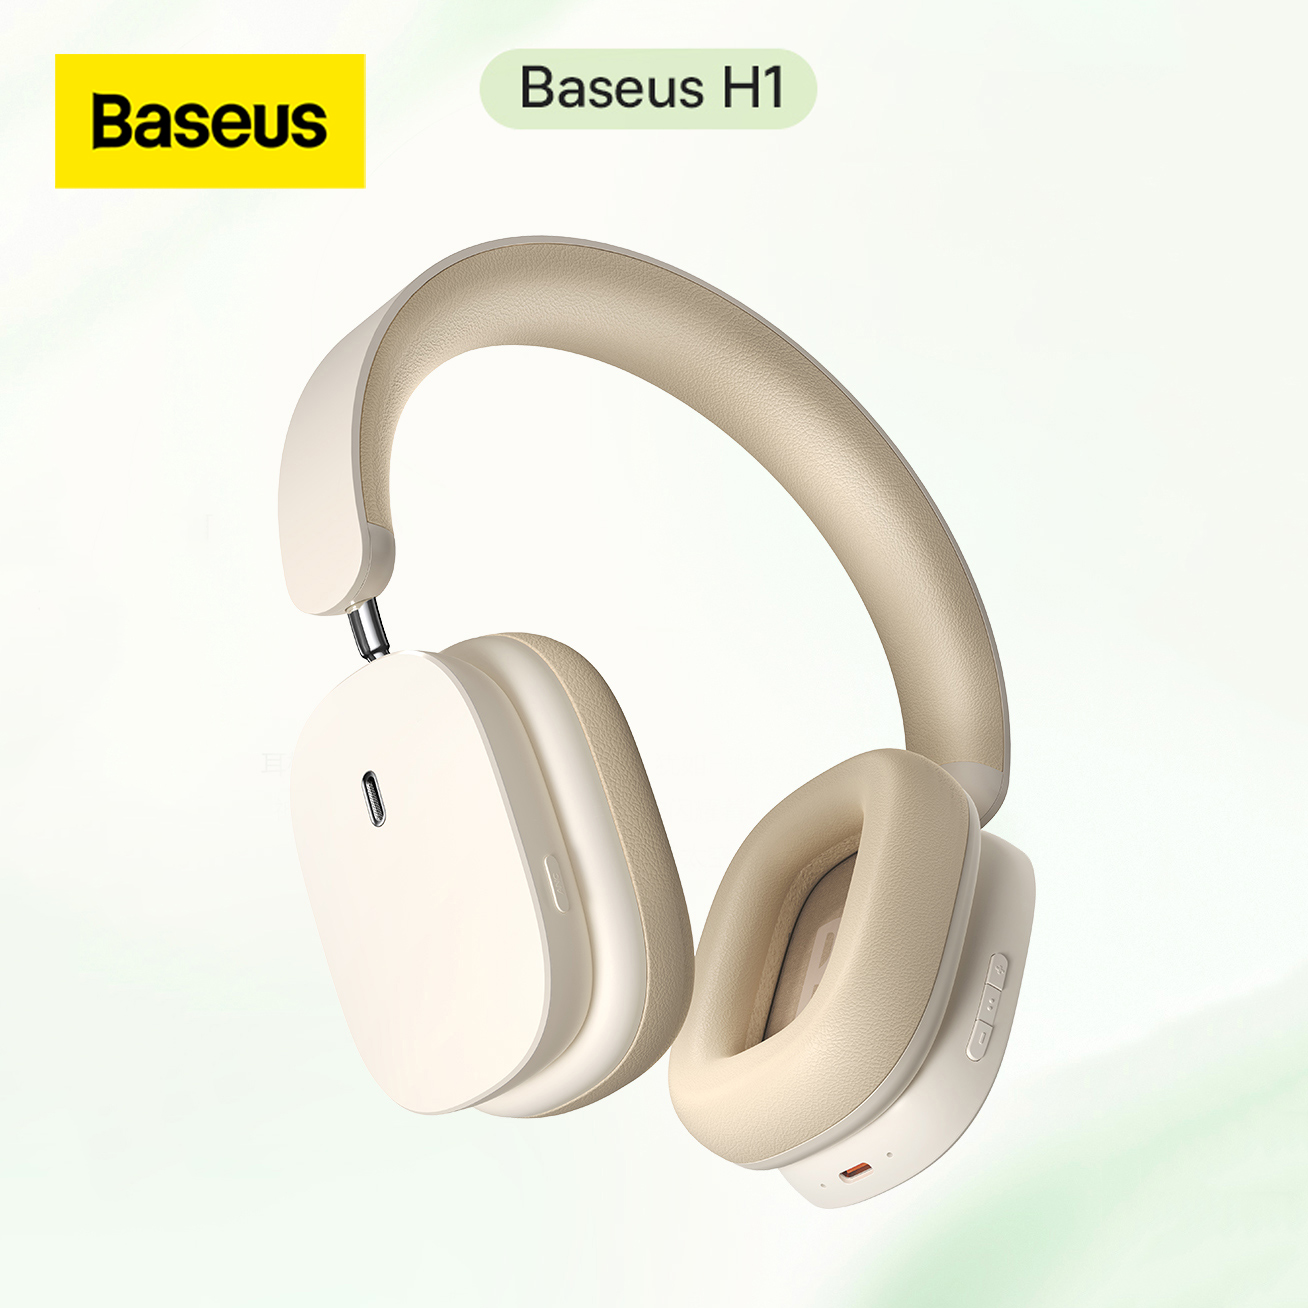 New Baseus Bowie H1 Wireless Headphone For Xiaomi Huawei Phone Noise